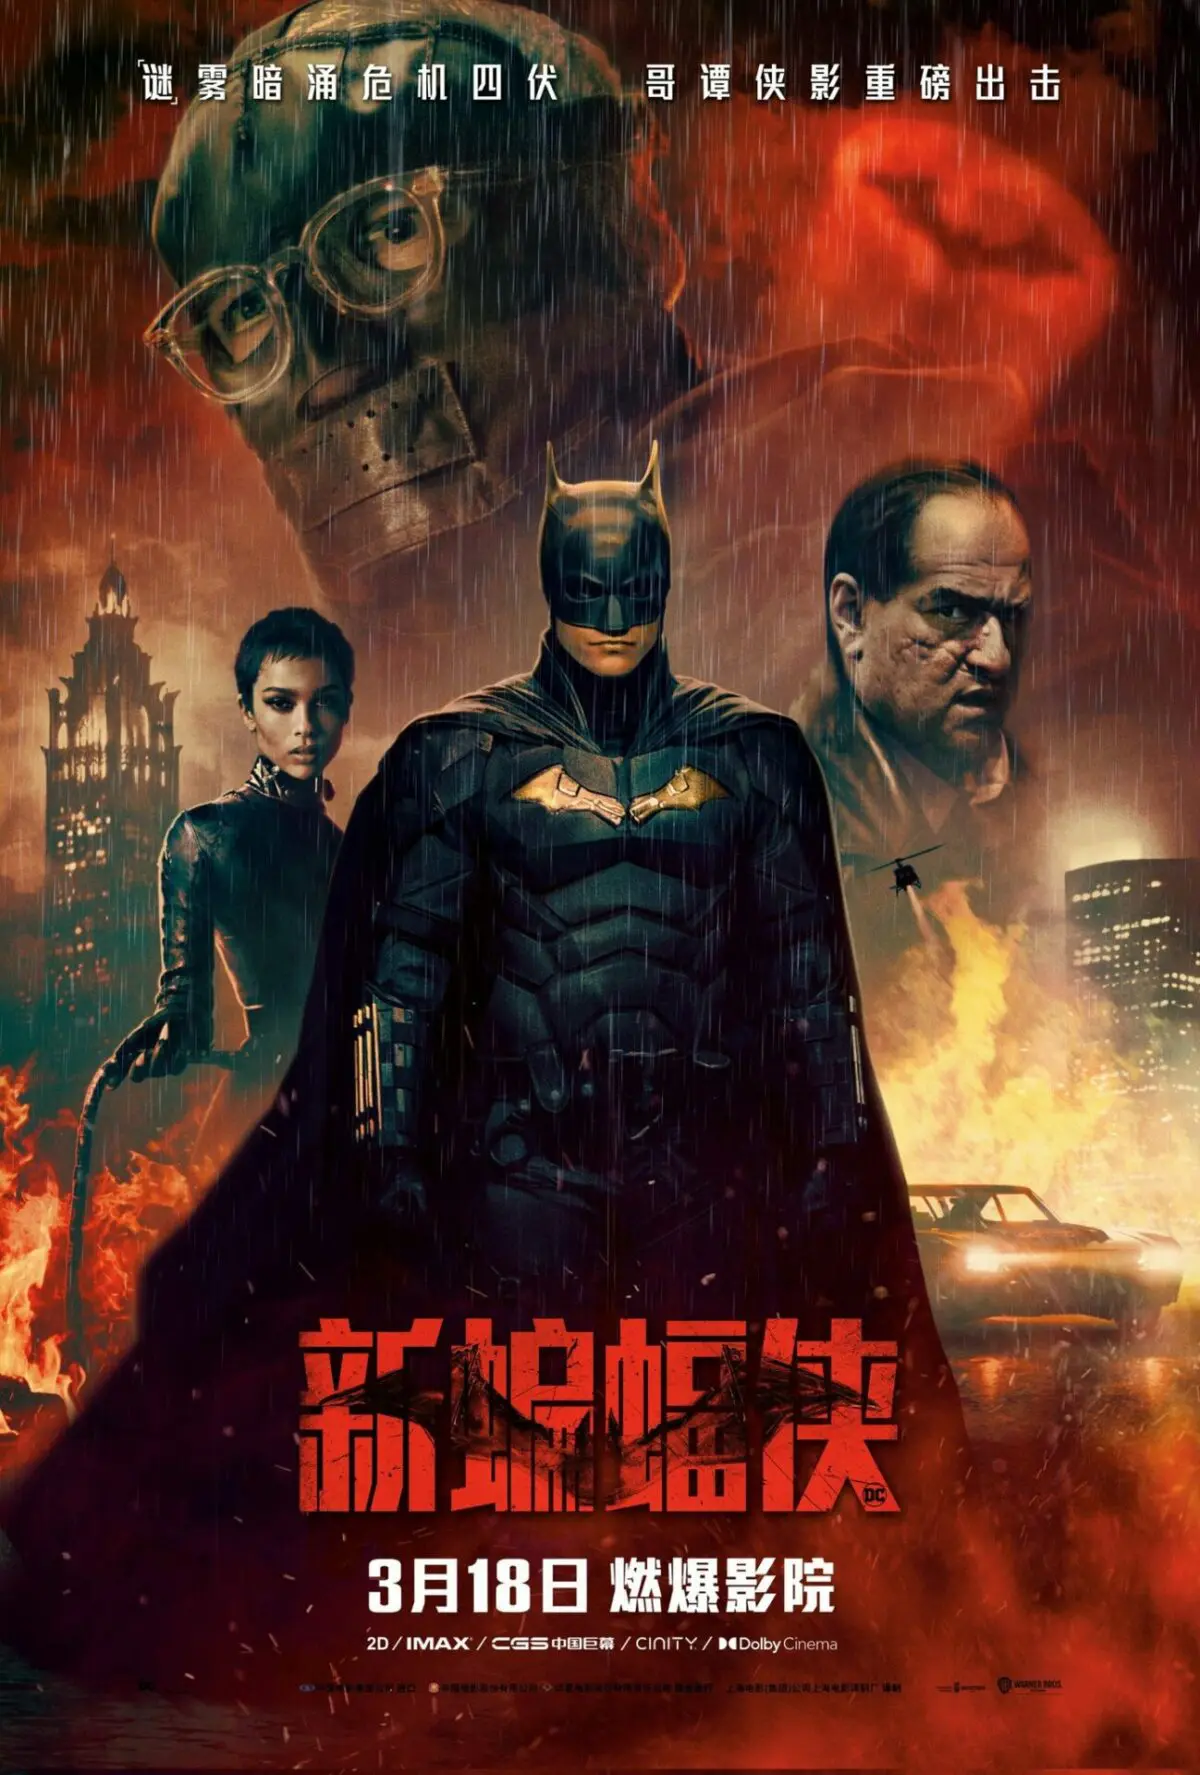 batman-poster-1200x1775-legadodadc.jpg.webp